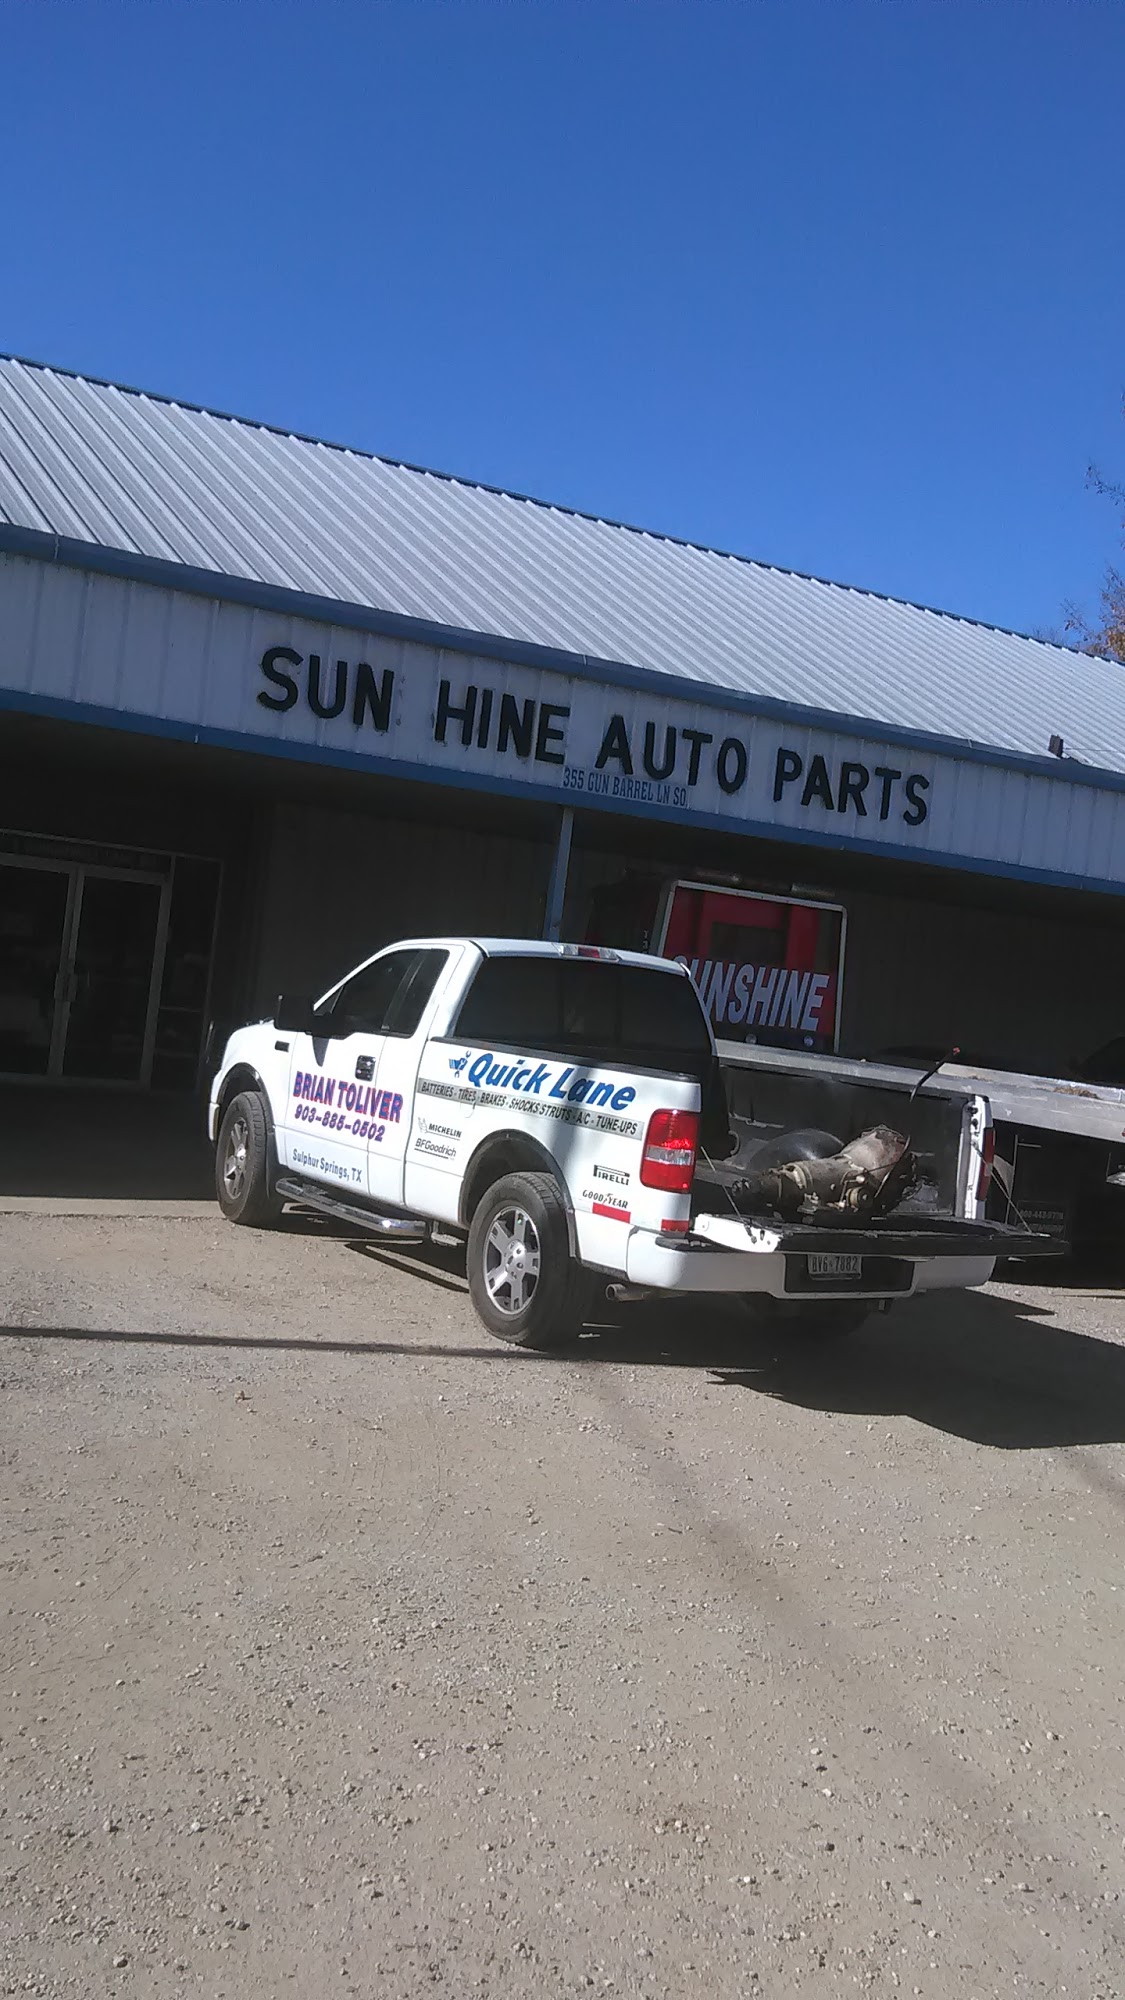 Sunshine Auto Parts